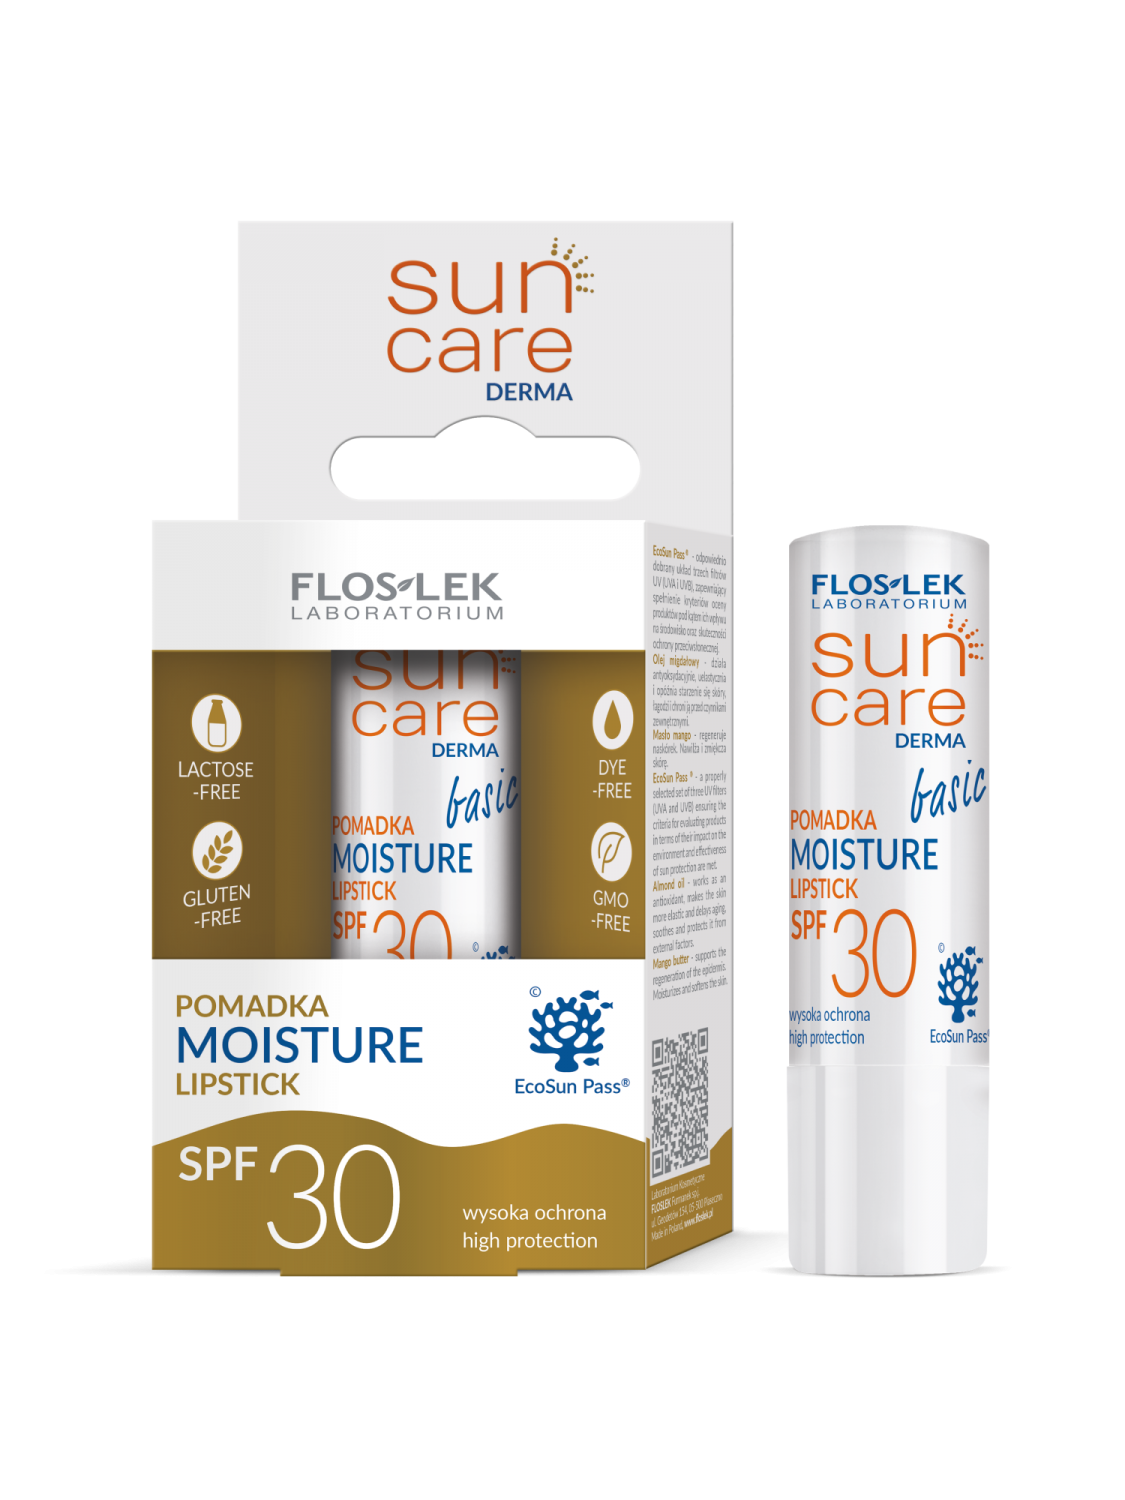 SUN CARE Derma Moisture  Protective Lipstick Spf 30 - Floslek